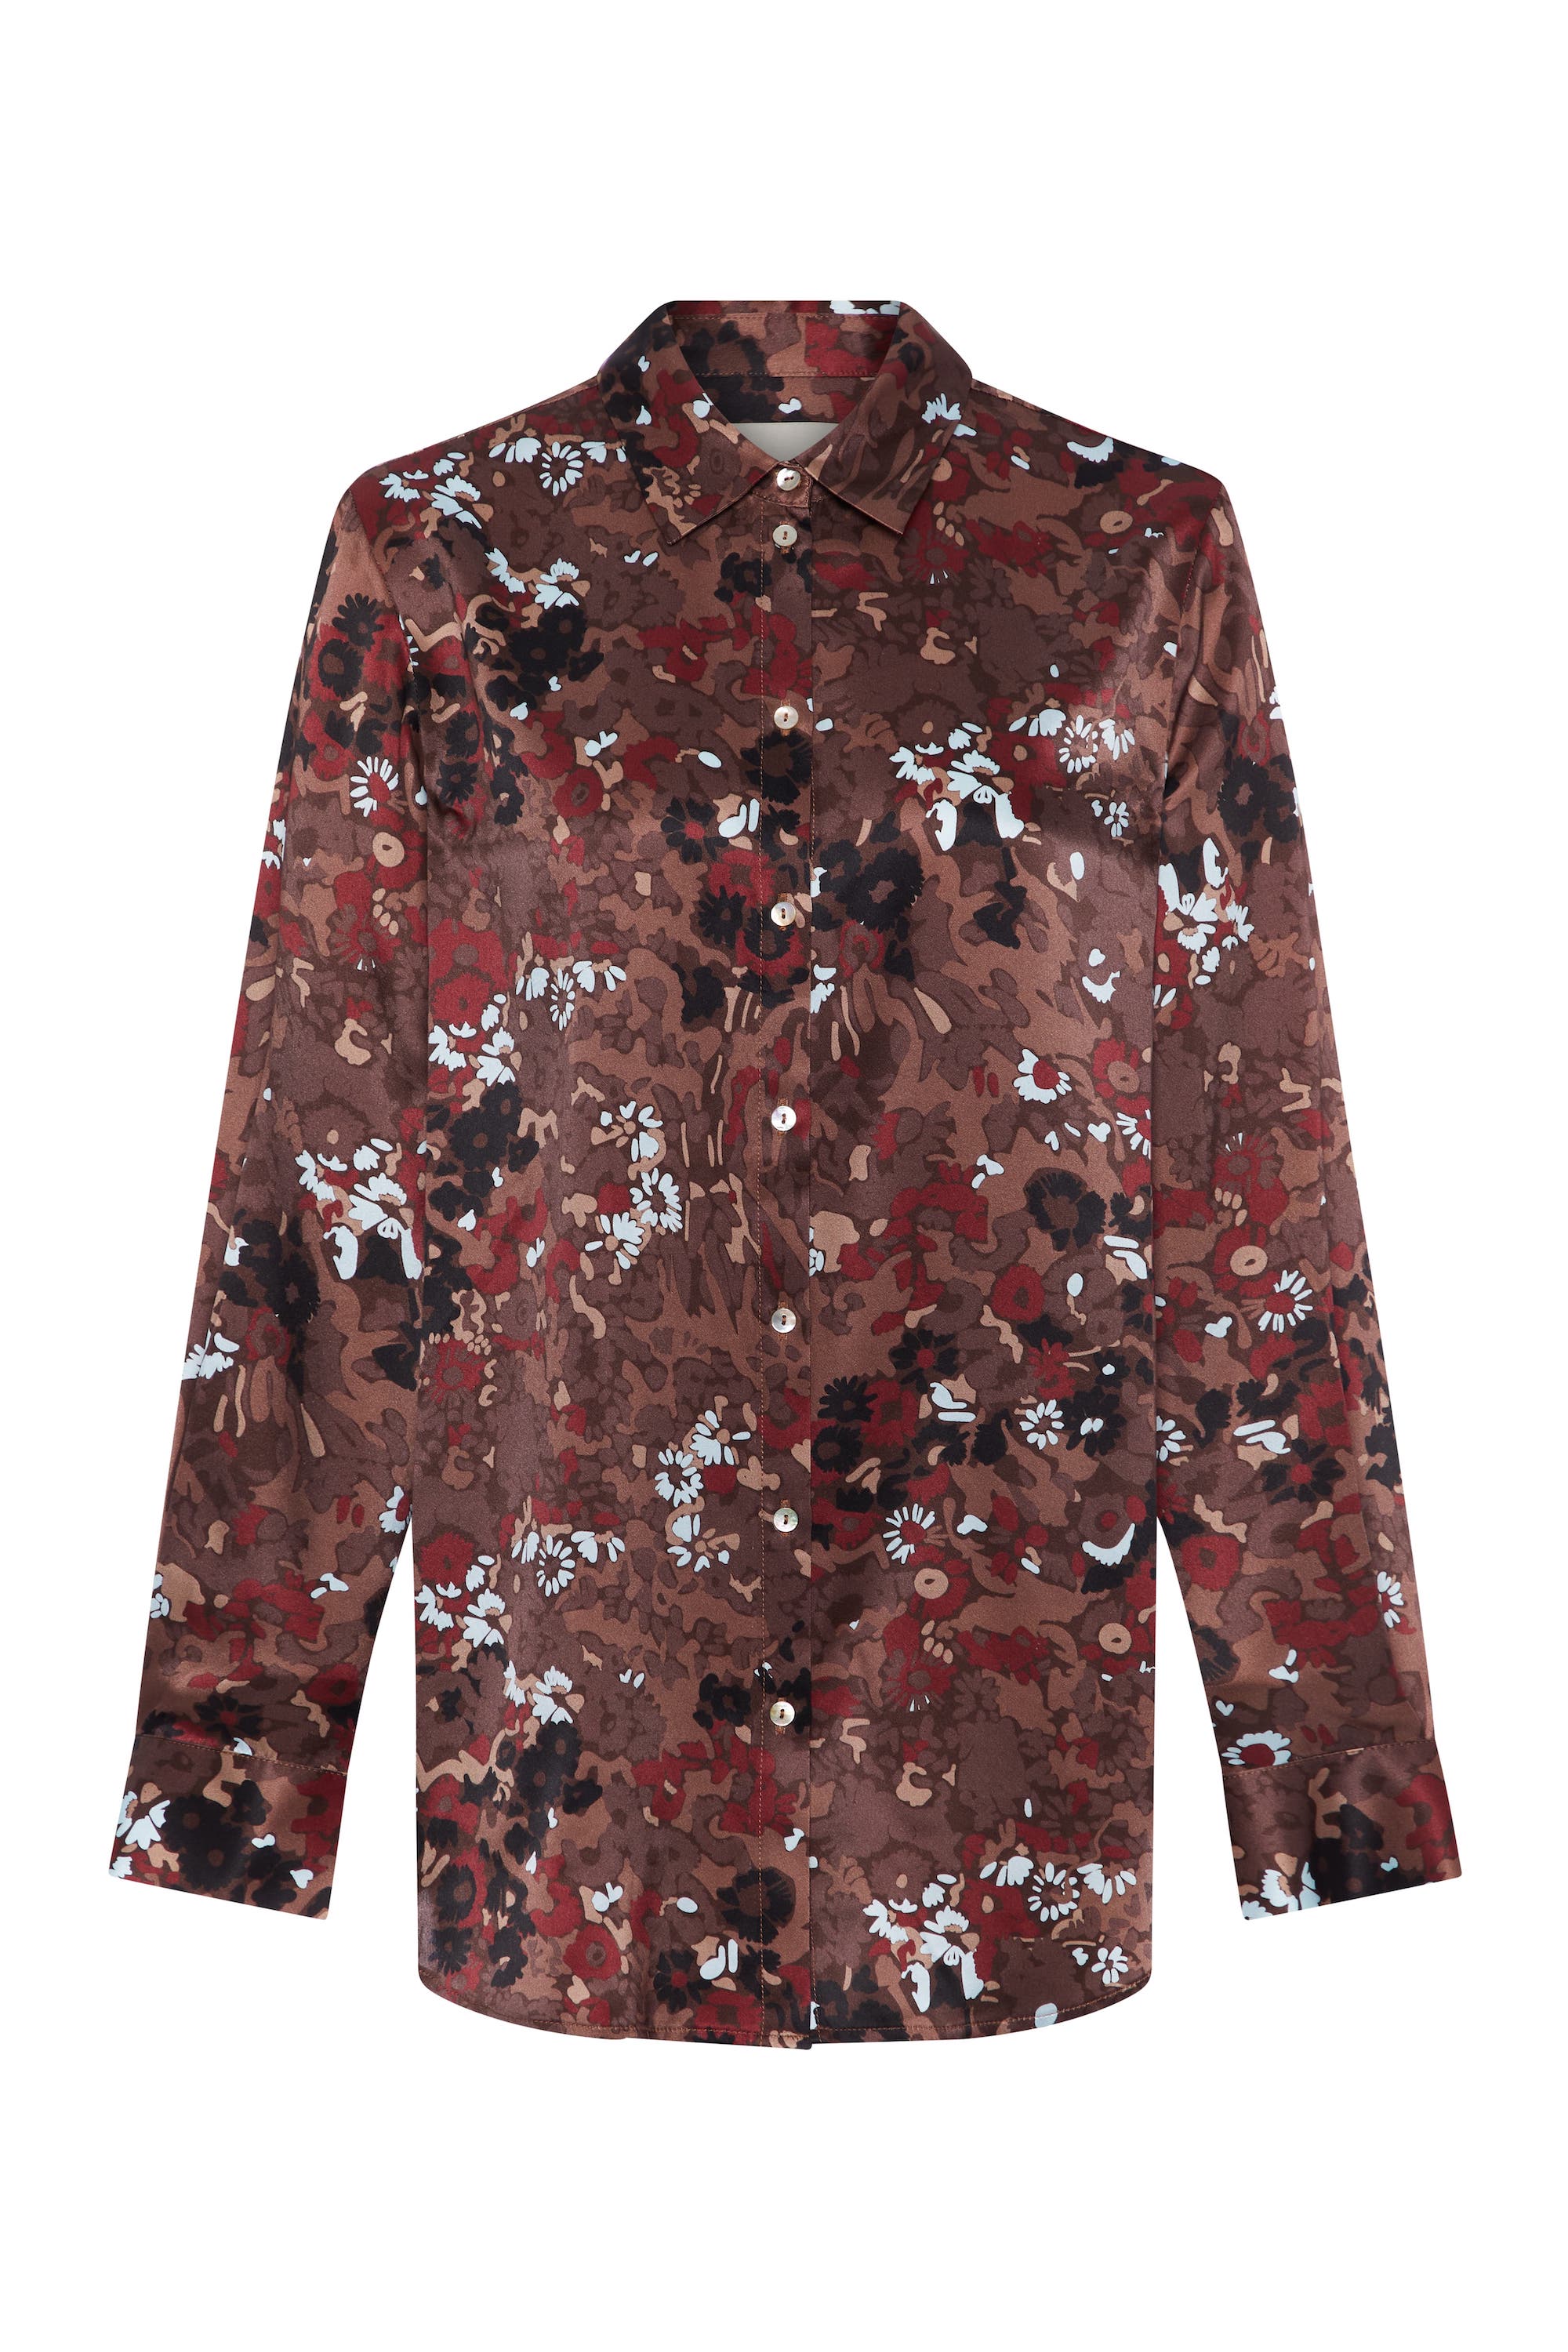 Shop Luxury Silk Pyjamas for Women | Asceno - Silk & Linen Clothing